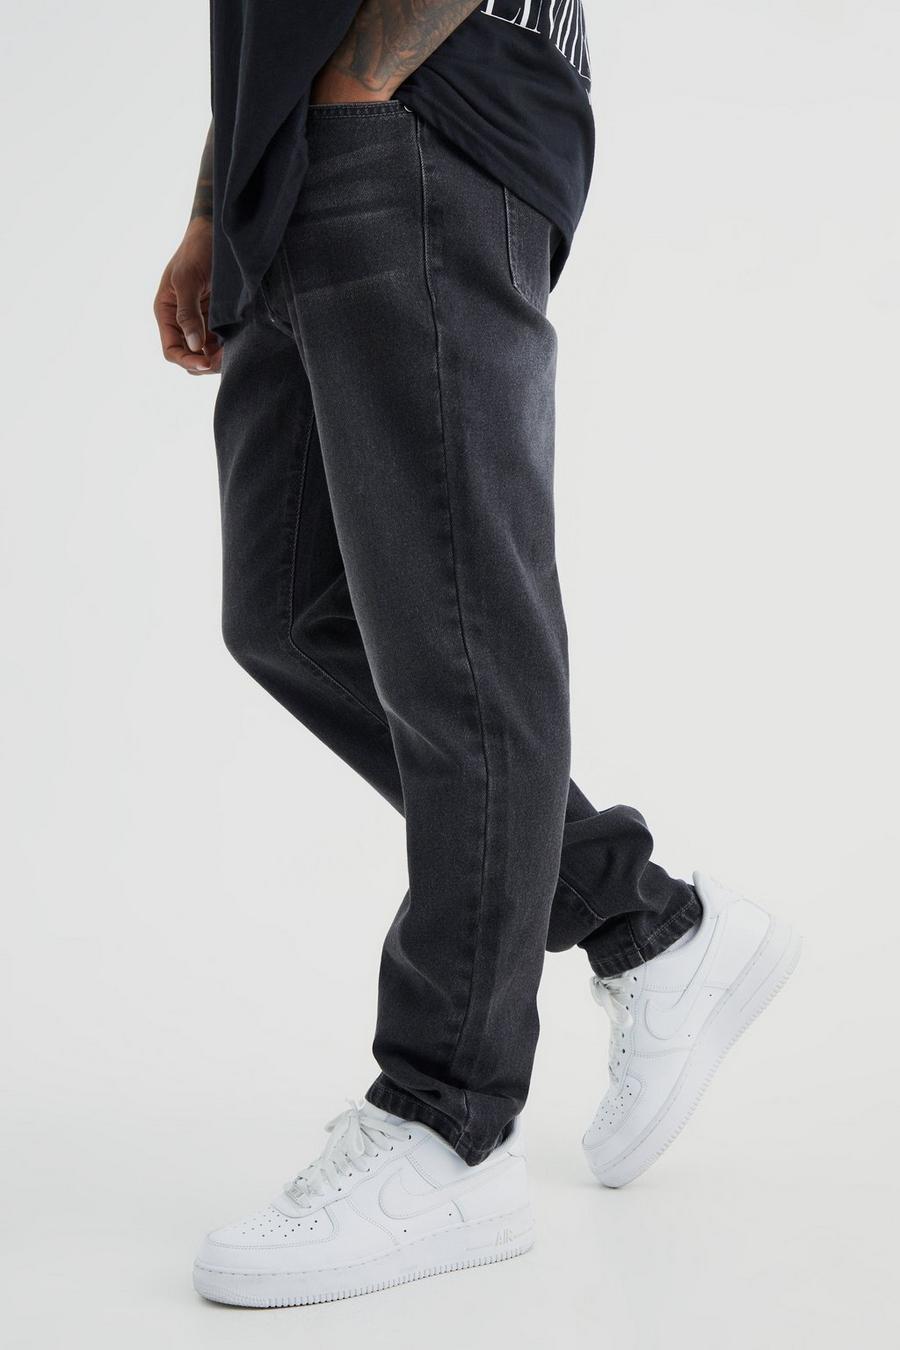 Jeans Slim Fit in denim rigido, Charcoal